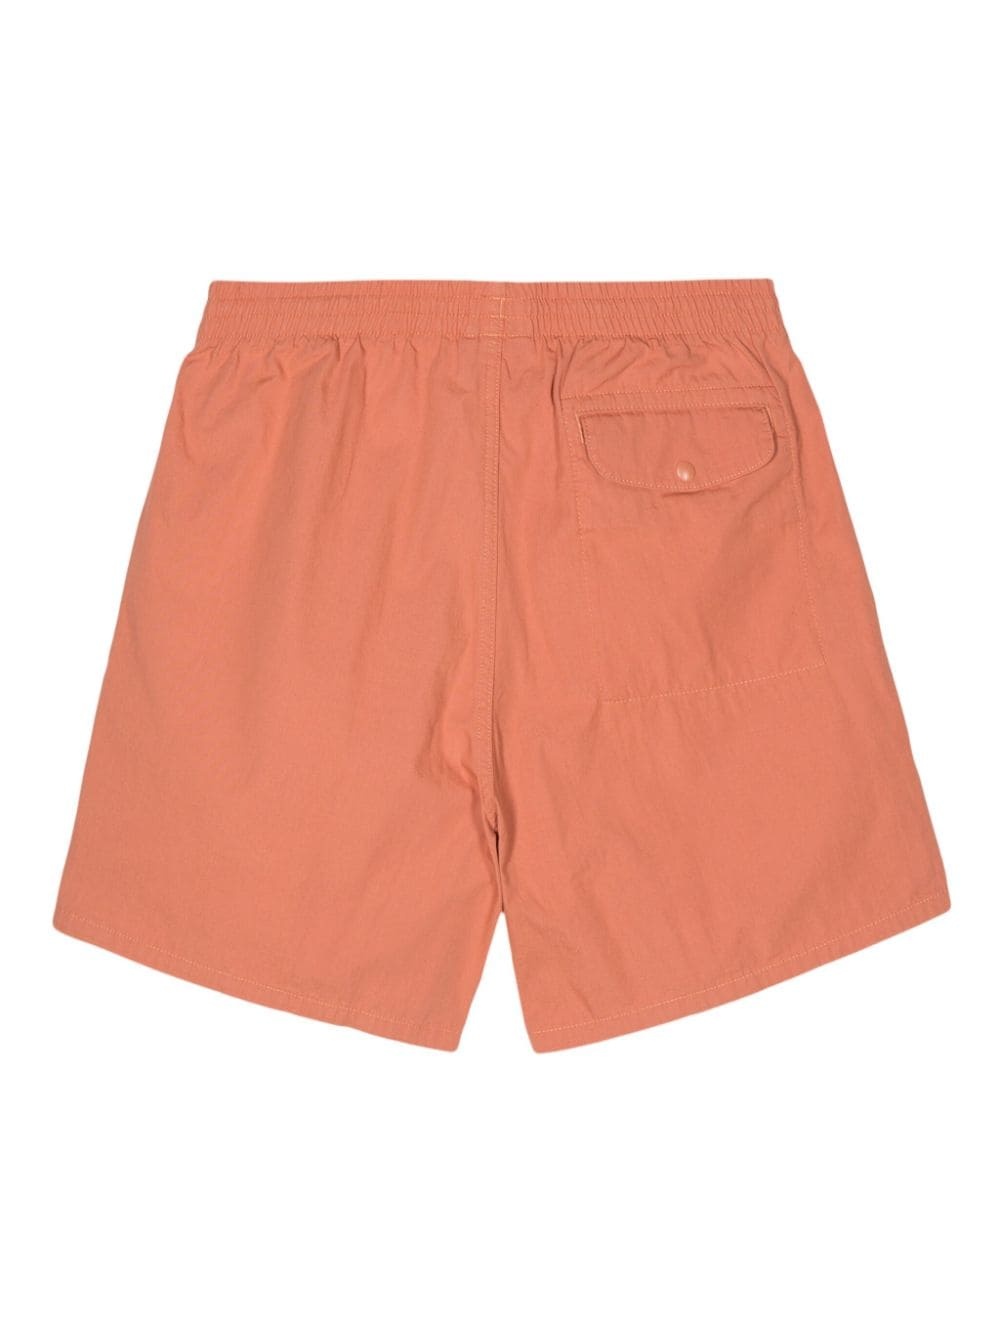 Funhoggers cotton shorts - 2